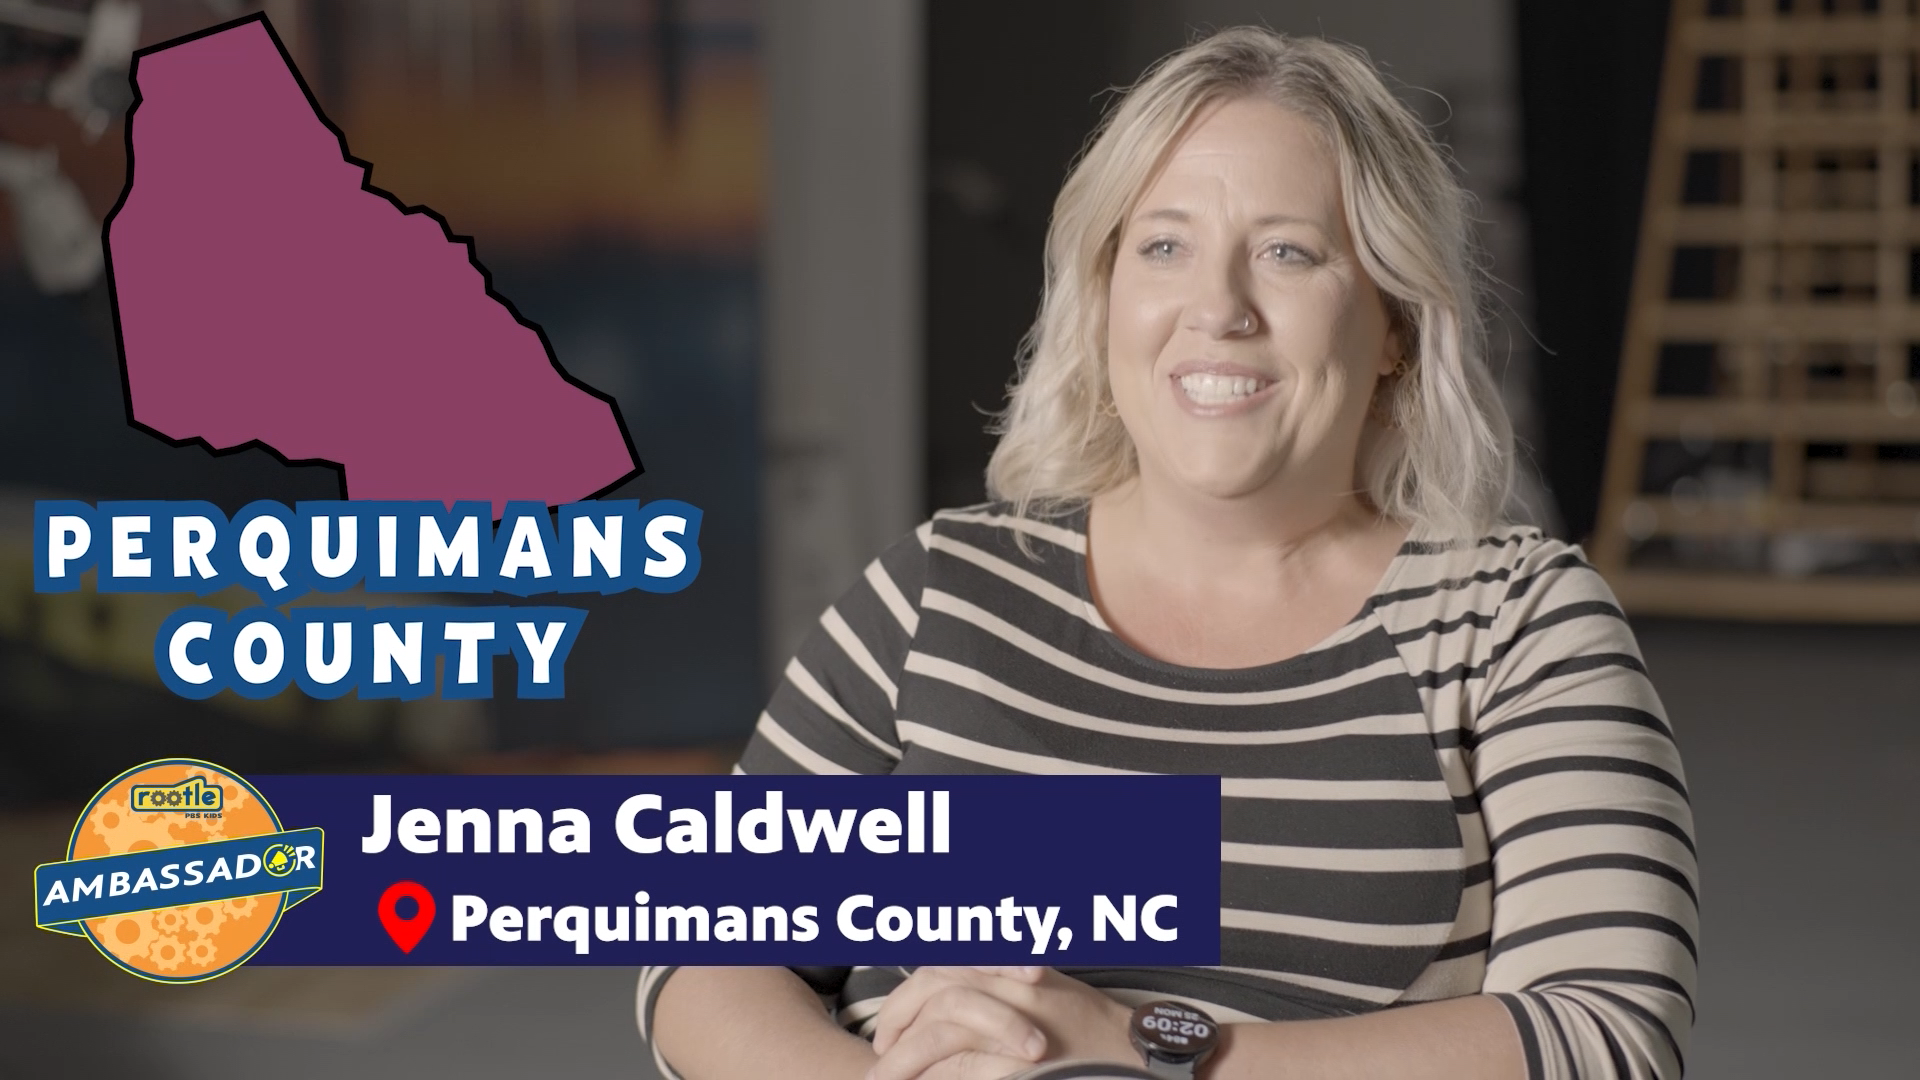 Meet Jenna Caldwell, Perquimans County Rootle Ambassador